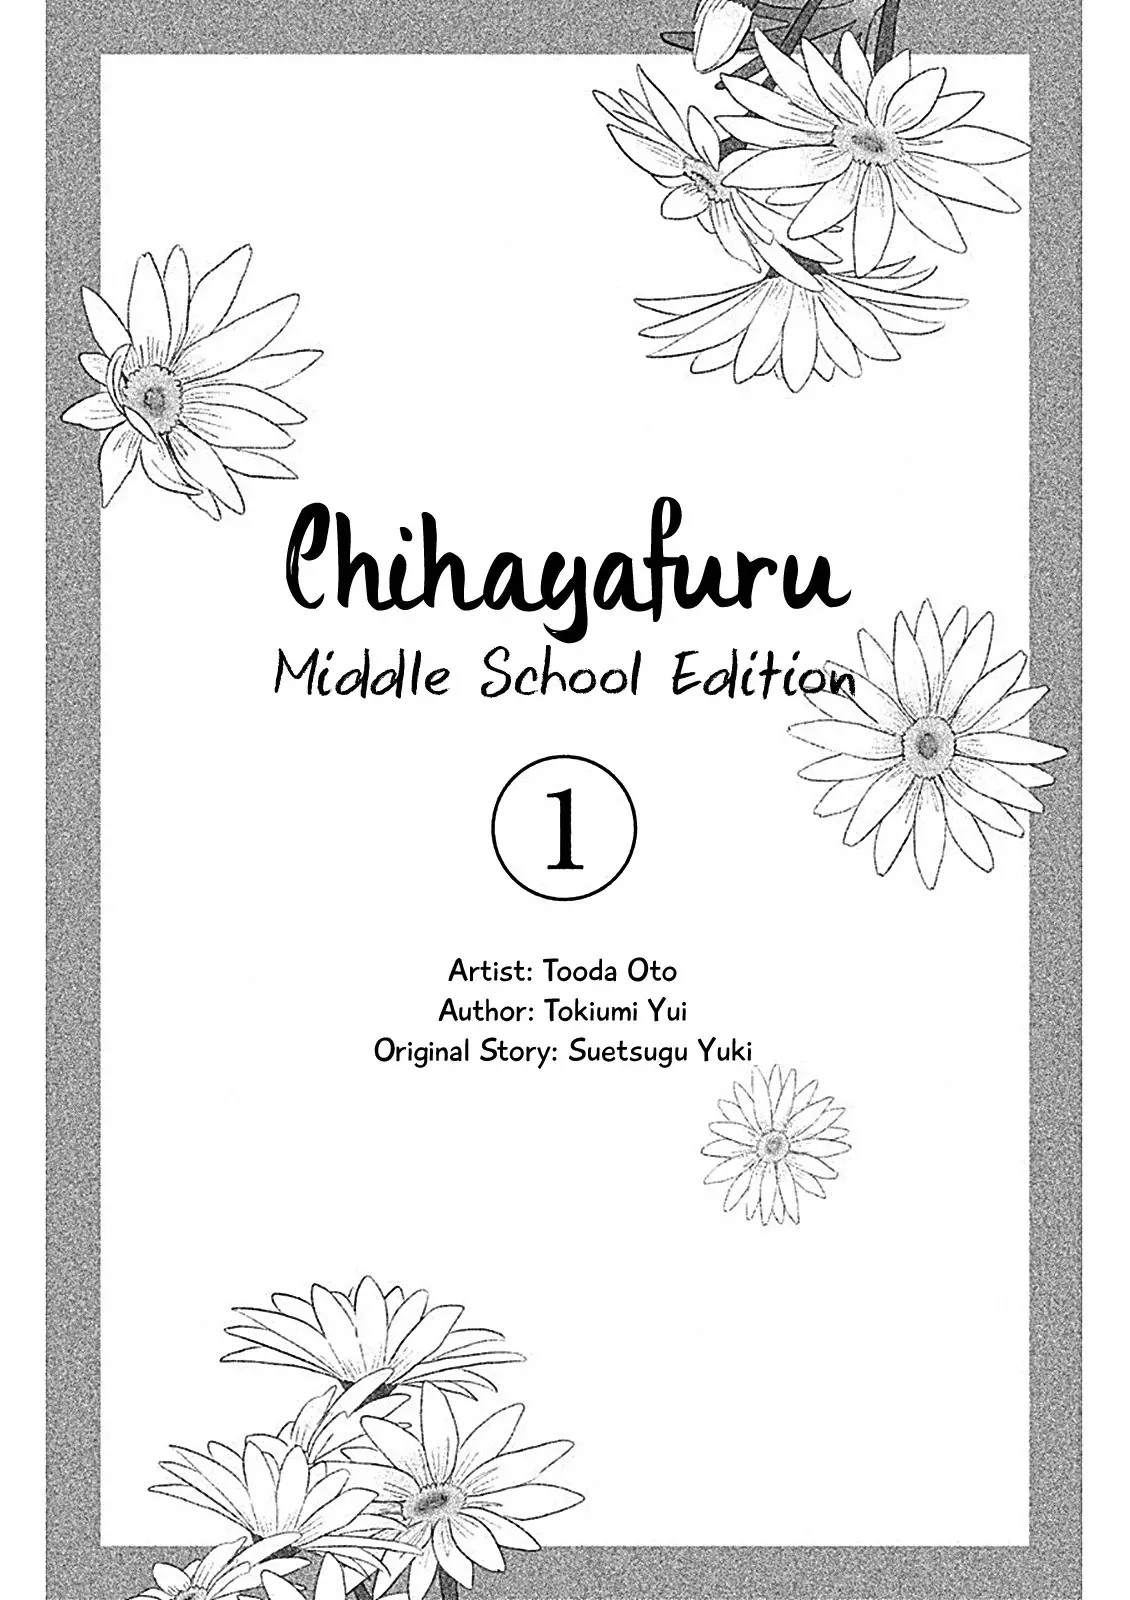 Chihayafuru: Middle School Arc - 1 page 3